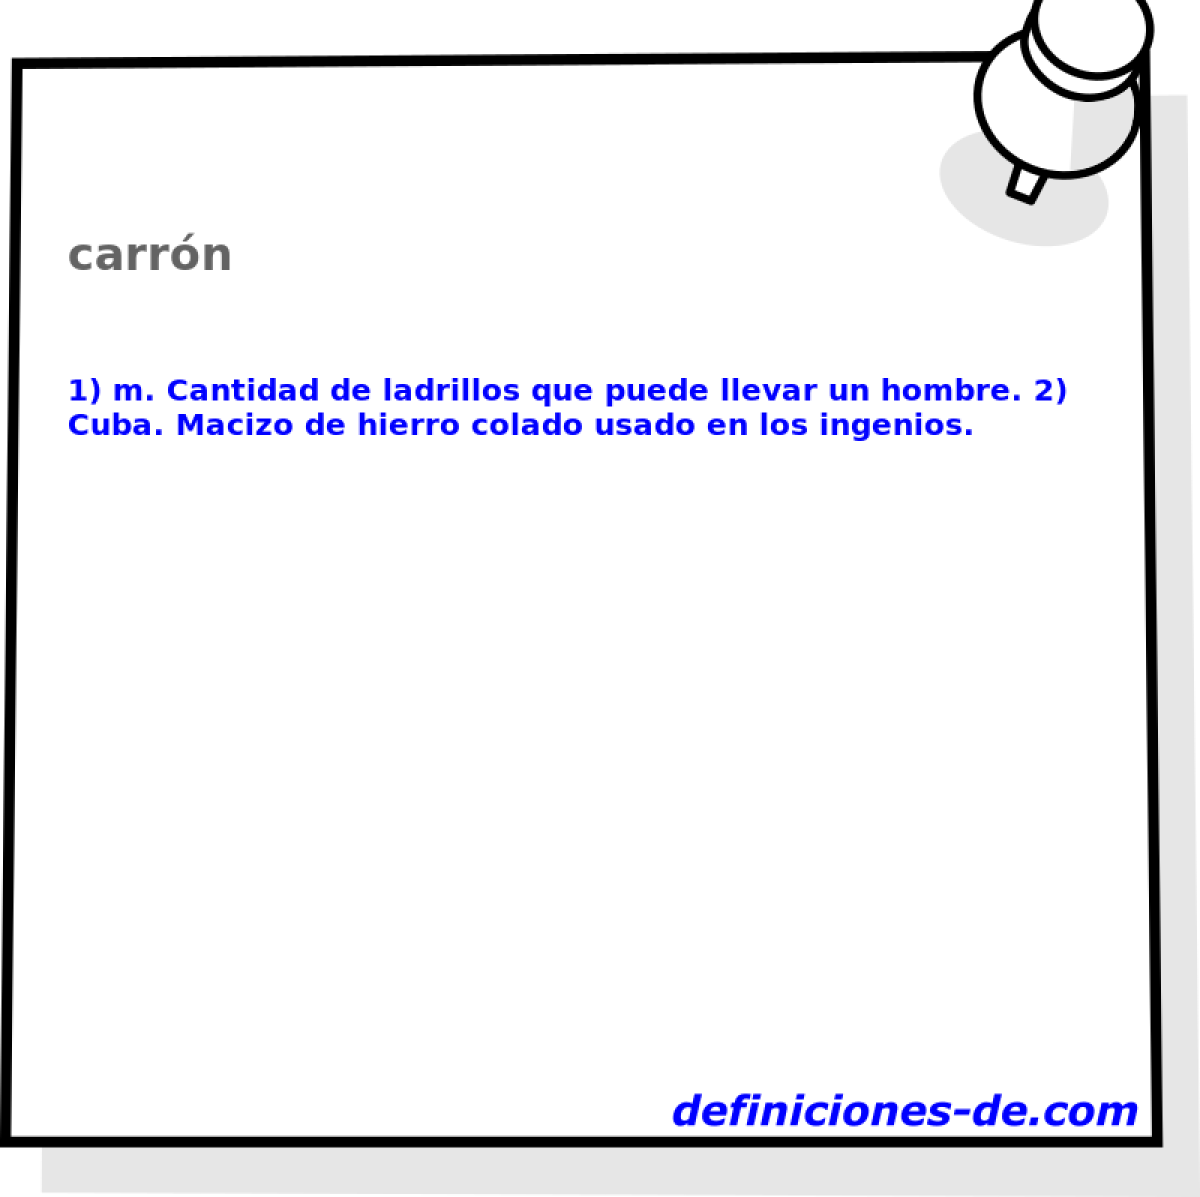 carrn 